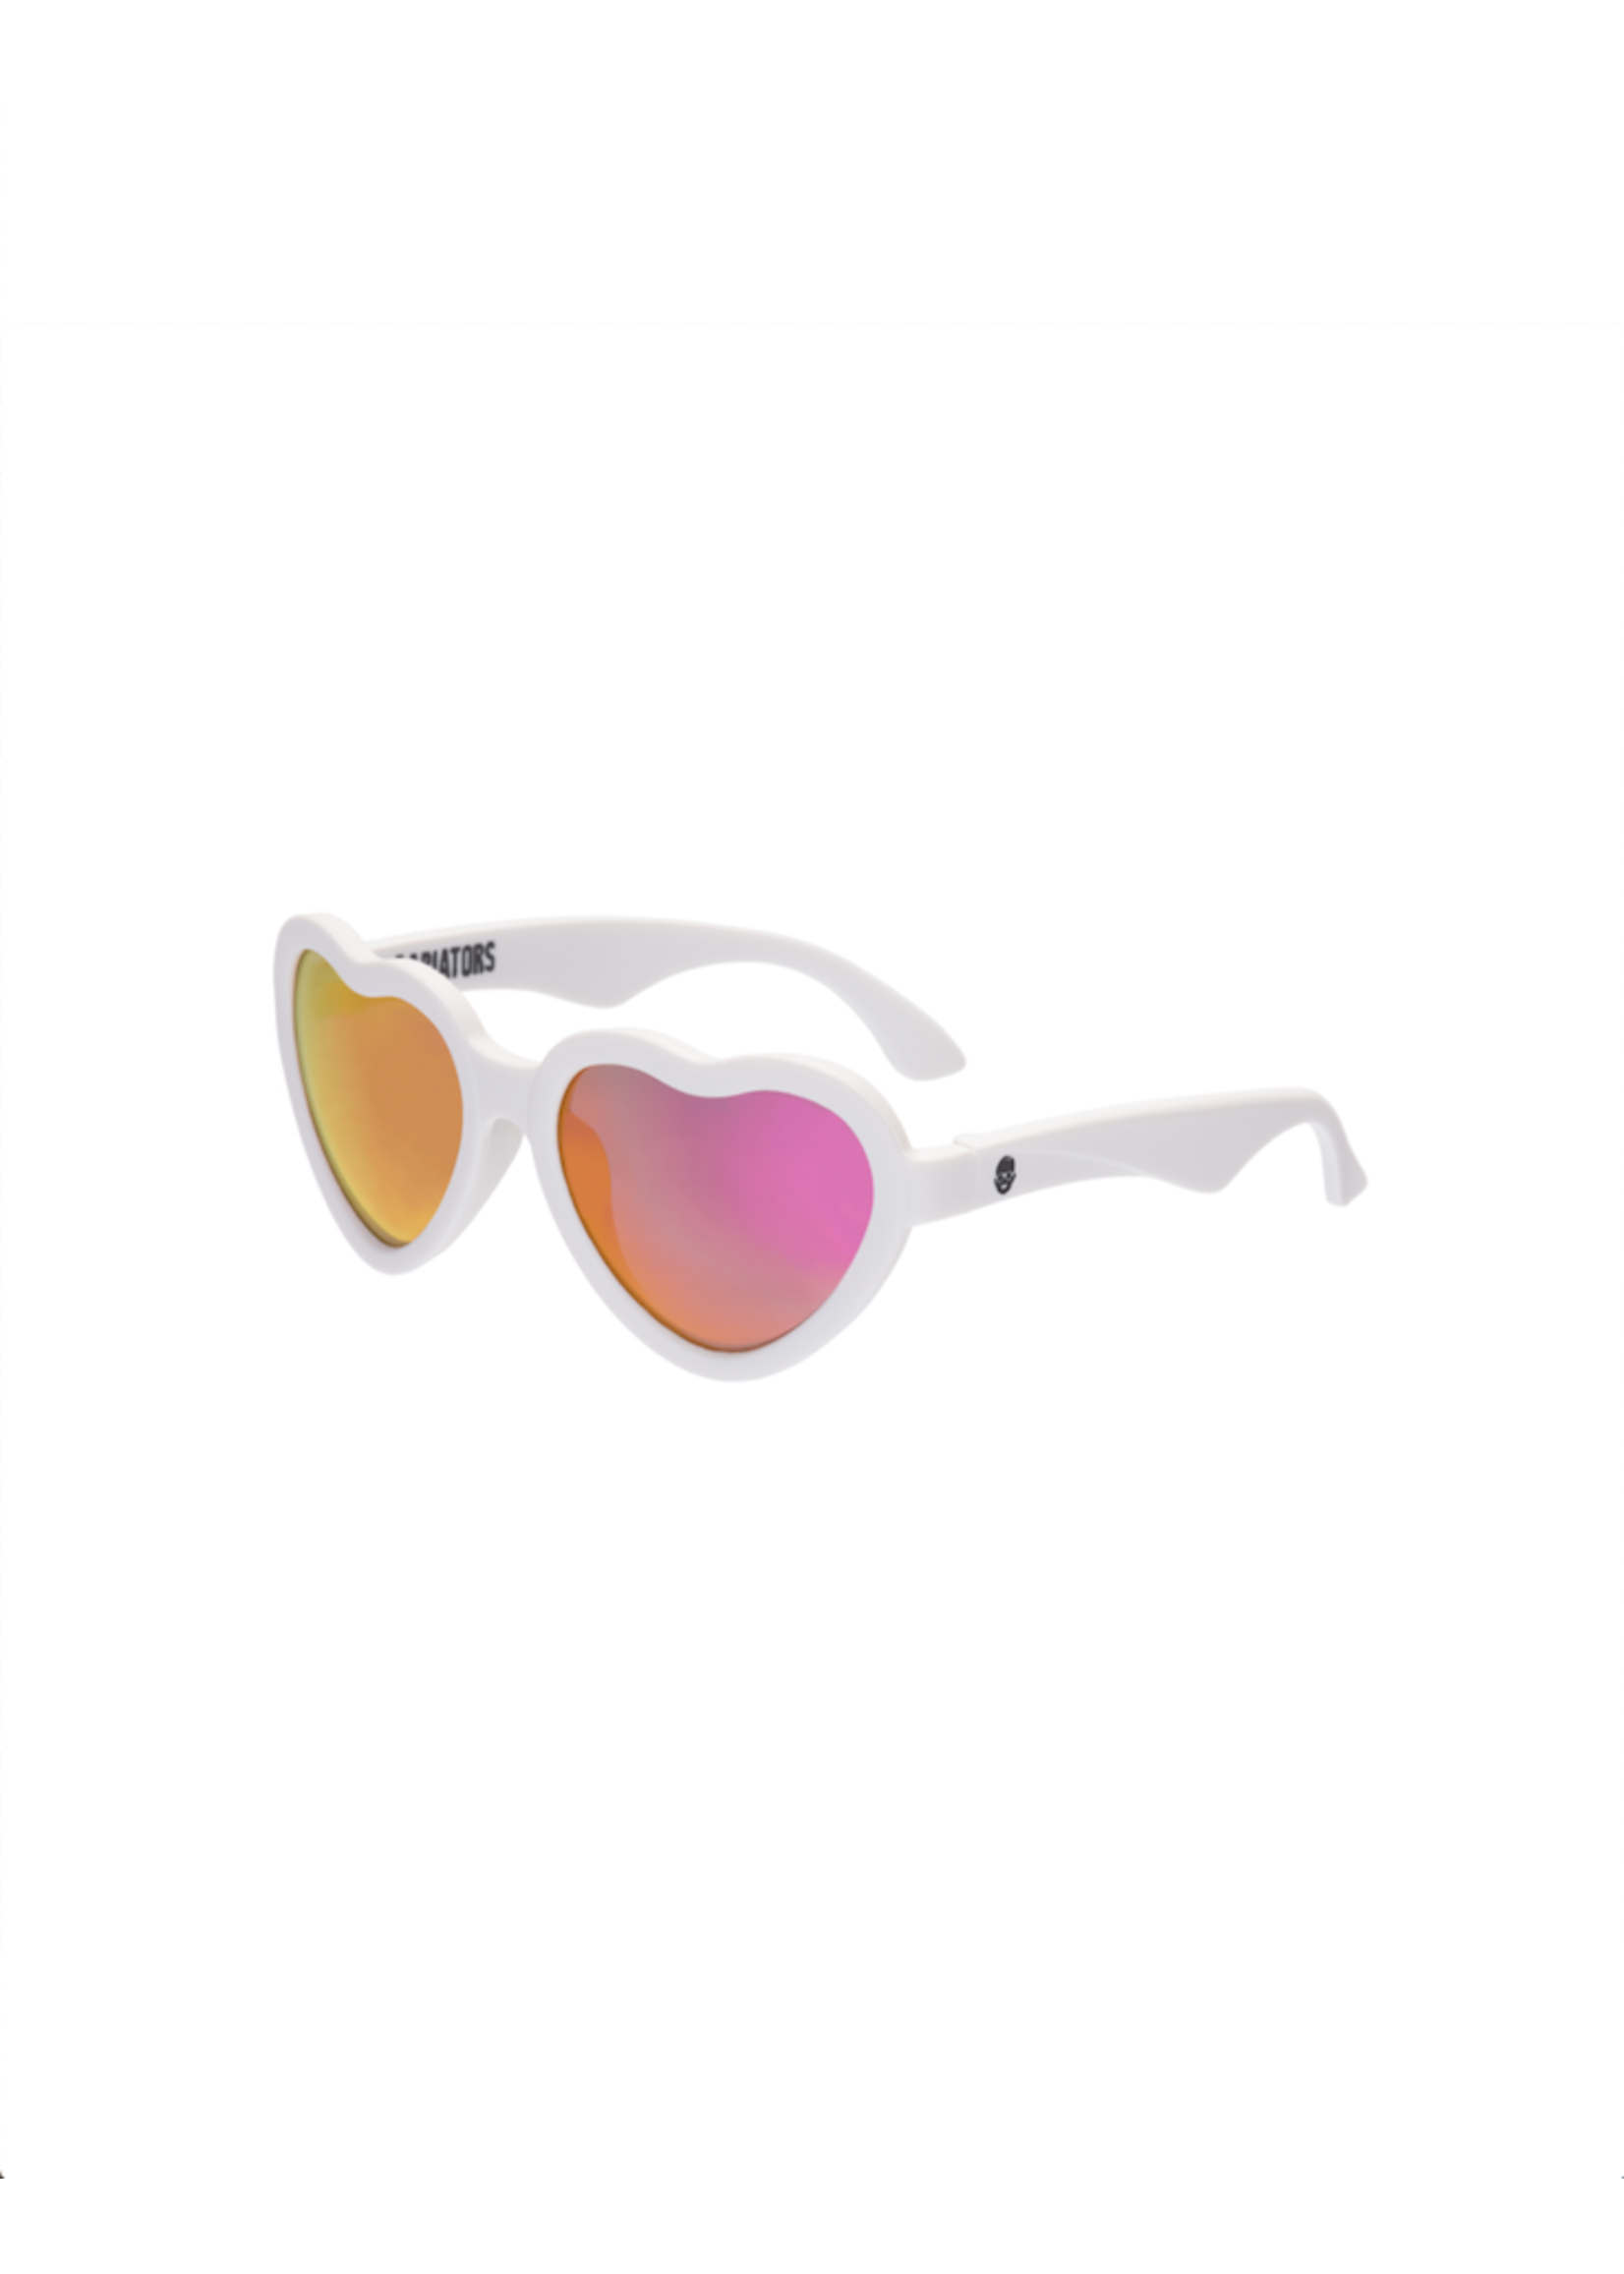 Babiators Babiators, Limited Edition, The SweetHeart Non-Polarized Sunglasses